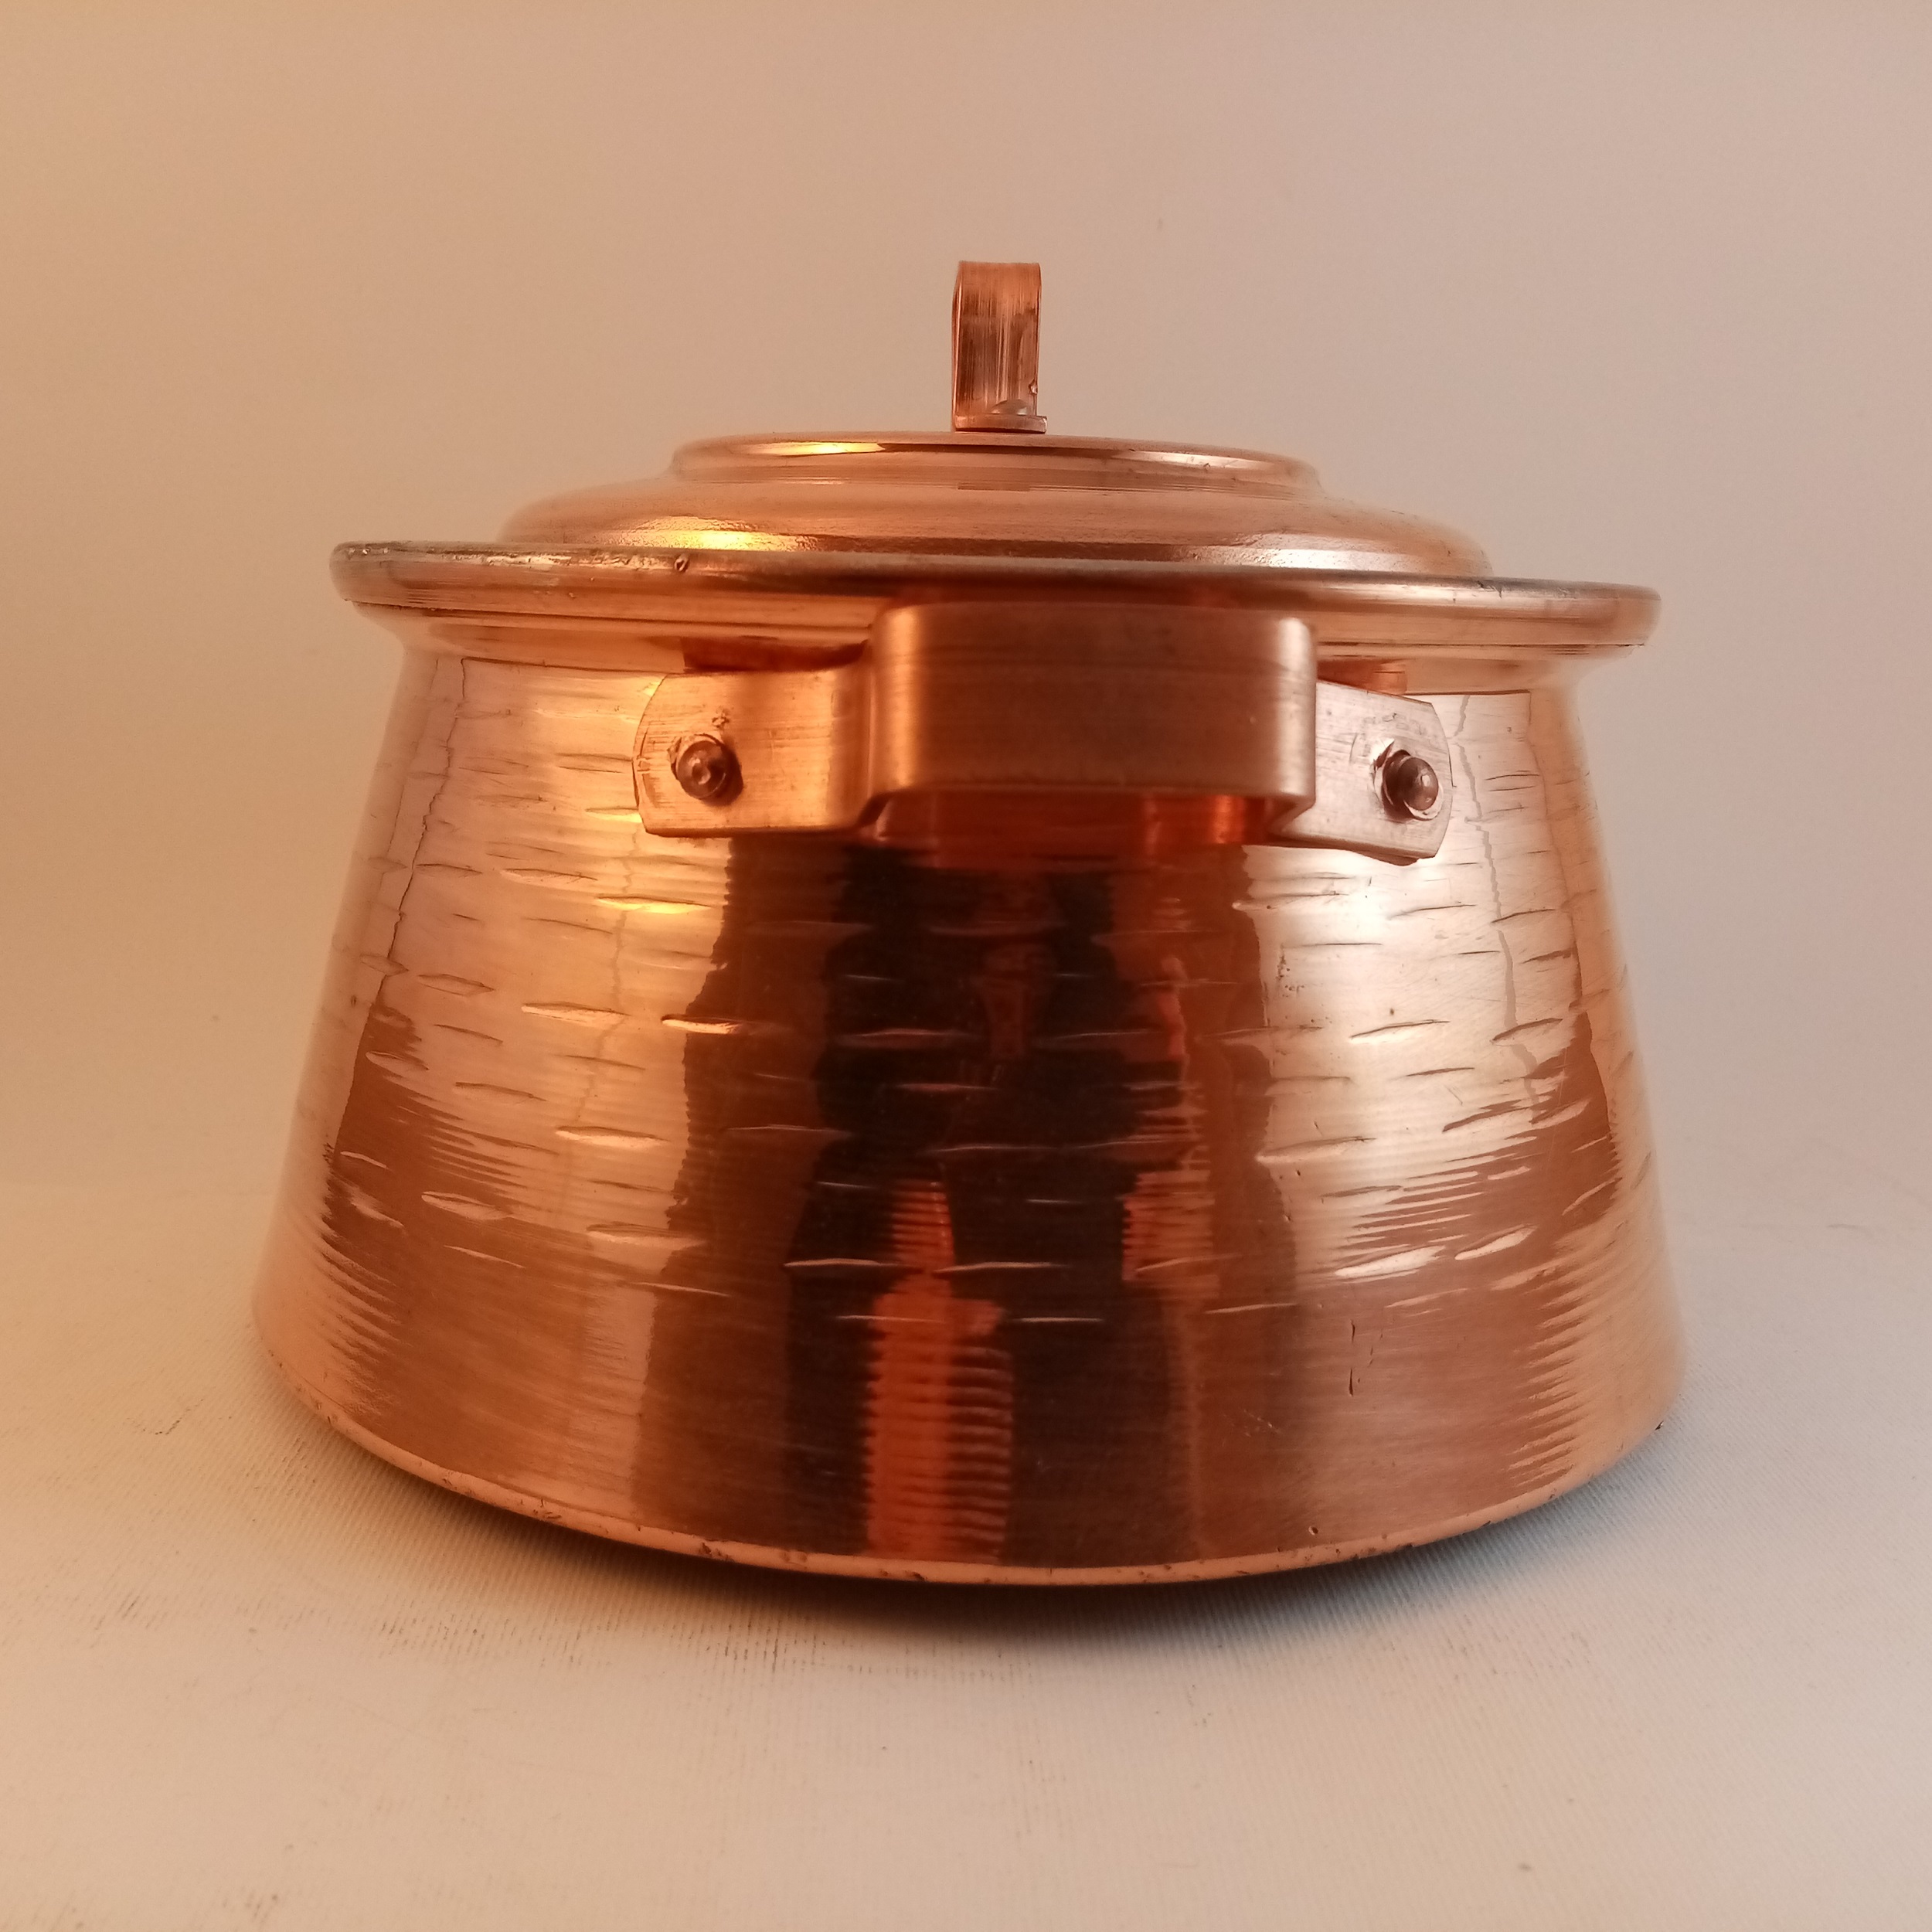 Copper pan, Model M25